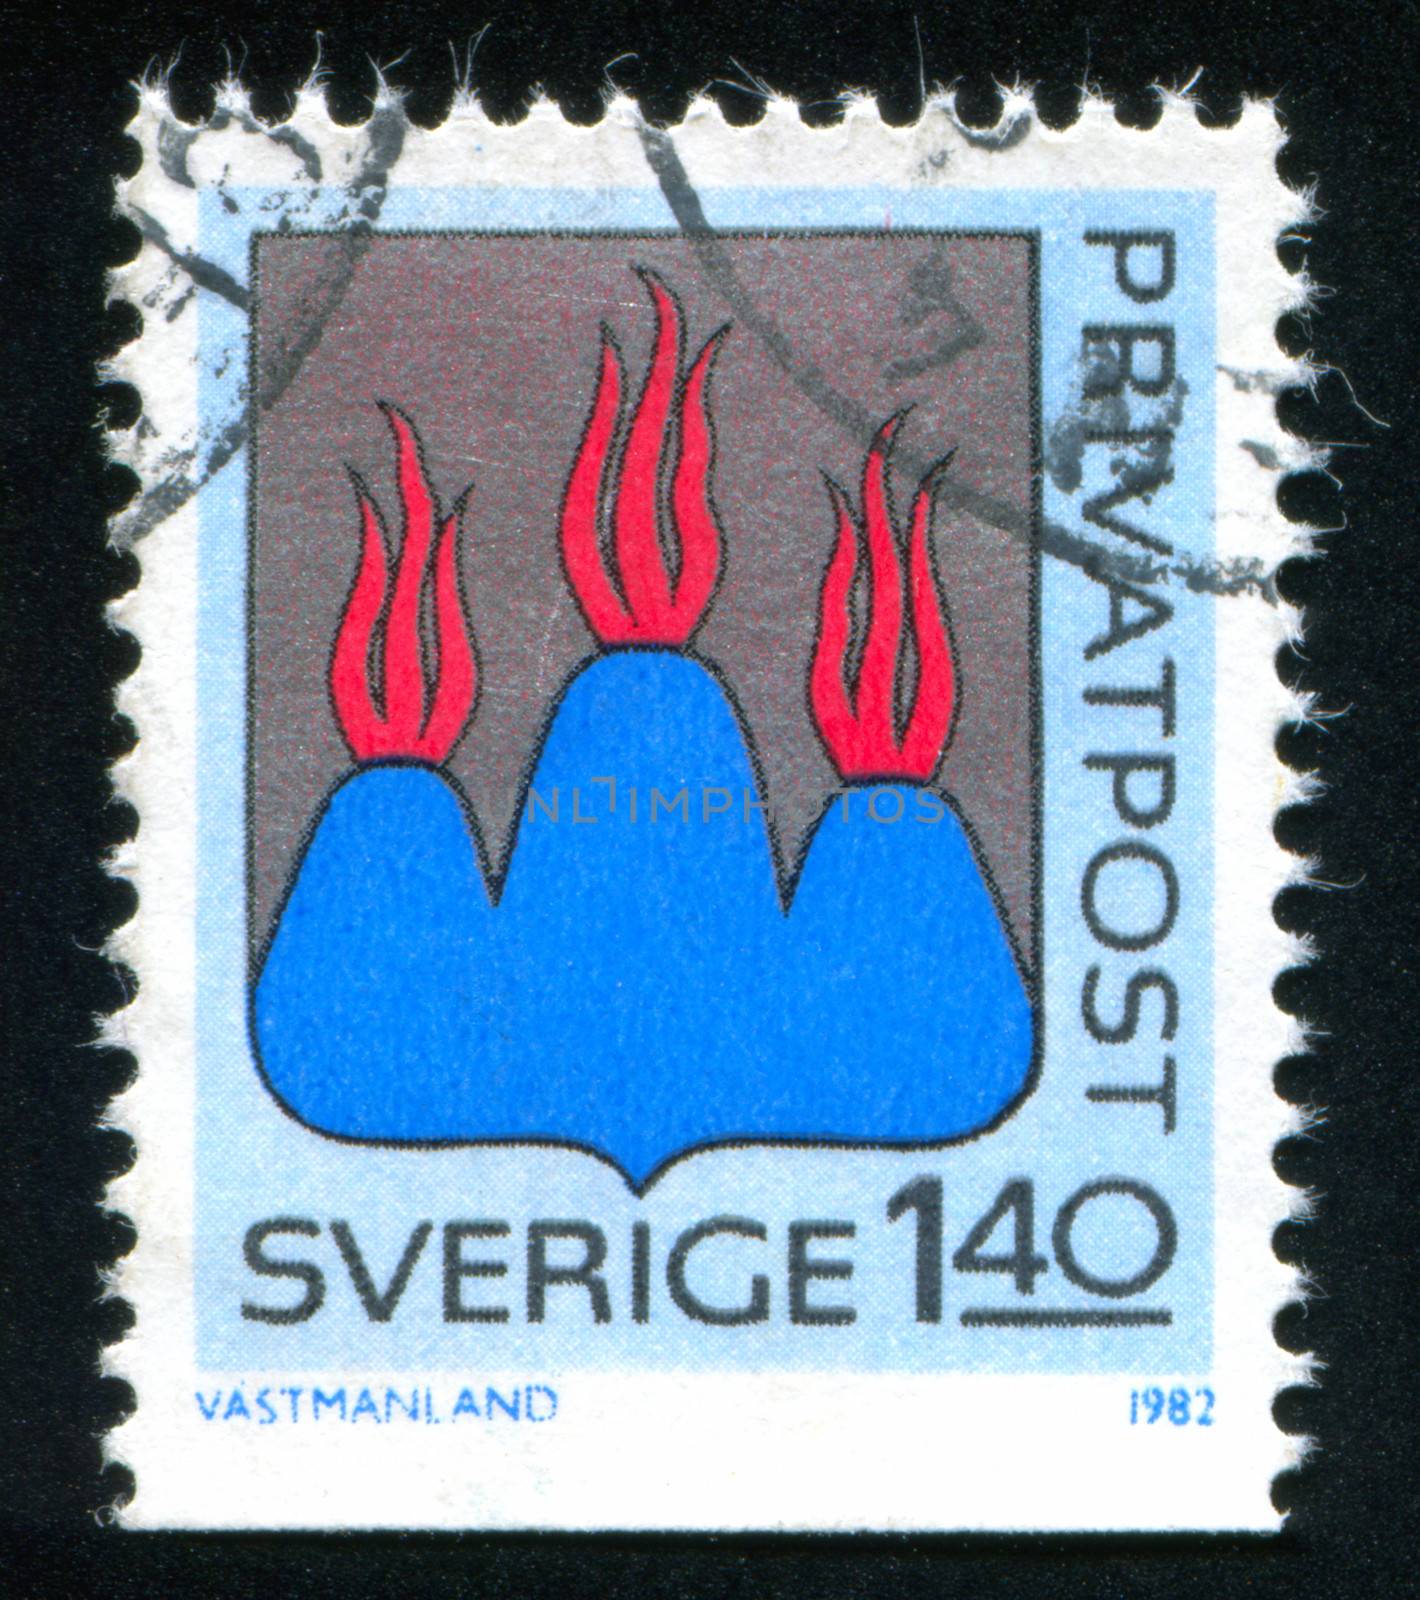 SWEDEN - CIRCA 1982: stamp printed by Sweden, shows Vastmandland Arms, circa 1982